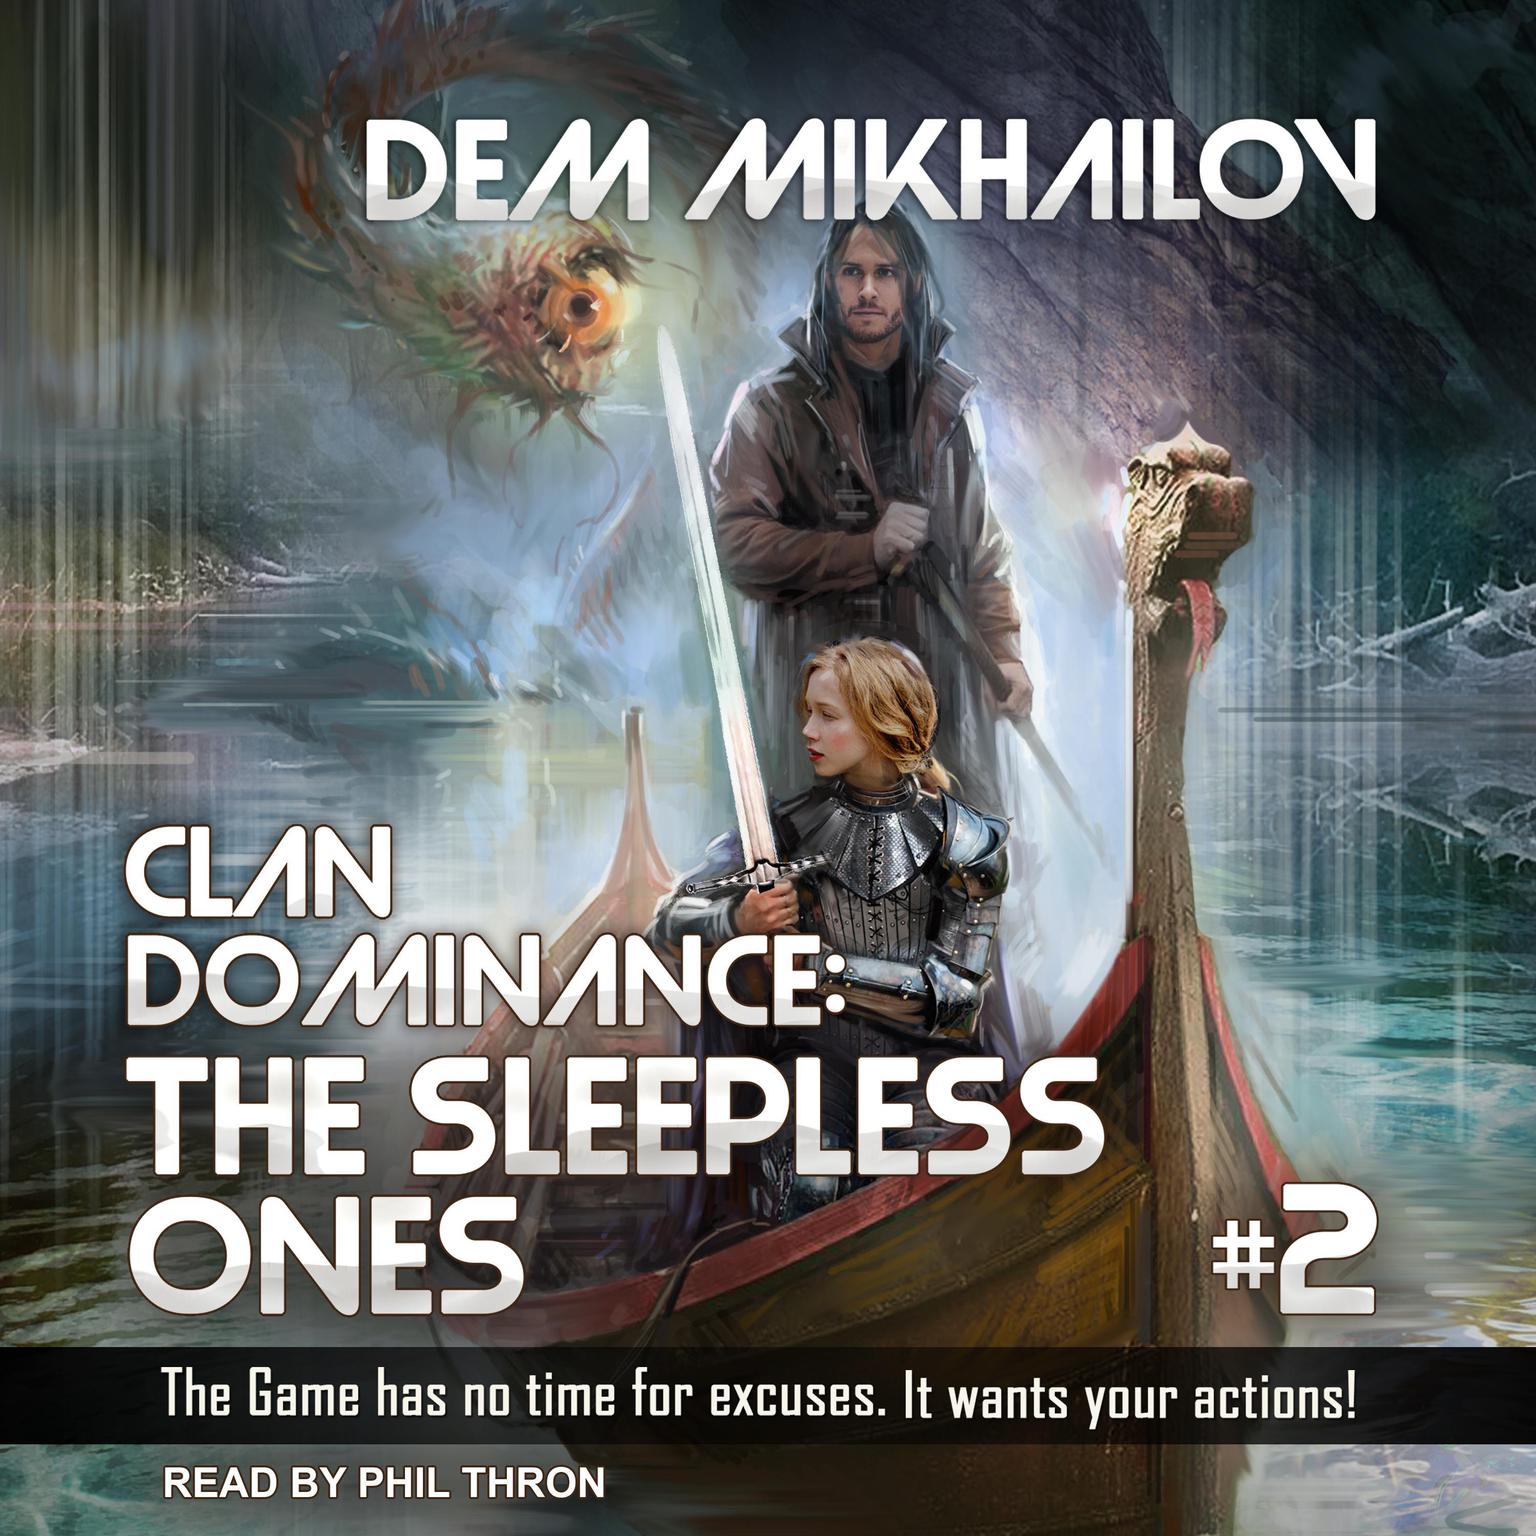 Clan Dominance: The Sleepless Ones #2 Audiobook, by Dem Mikhailov